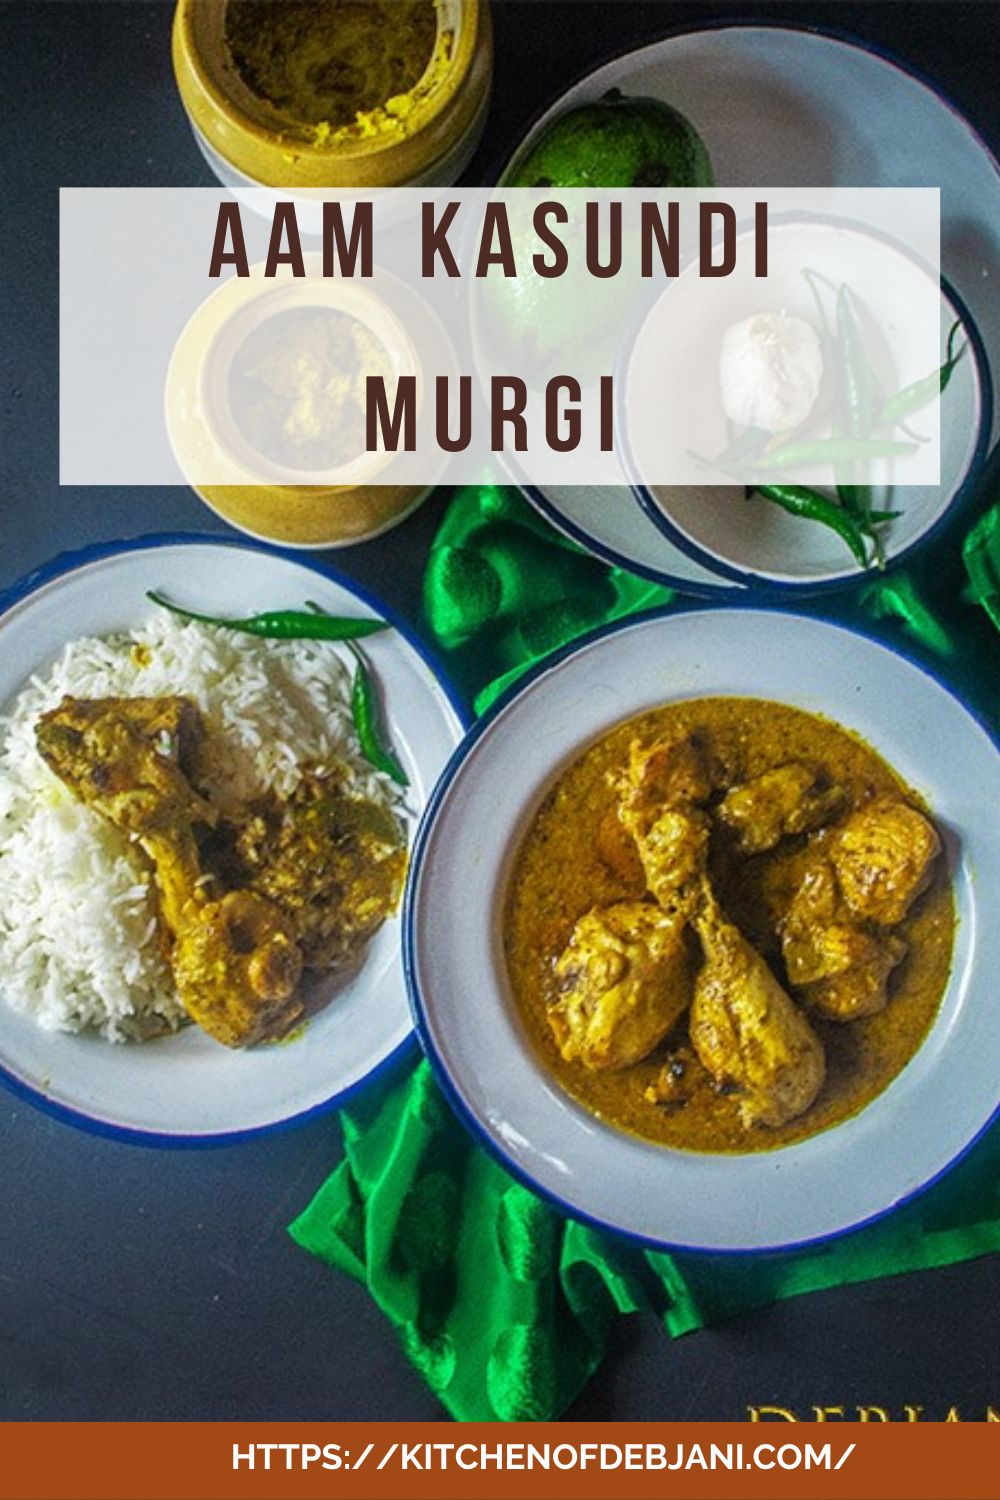 %Bengali Aam Kasundi Murgi Recipes pinterest food pin